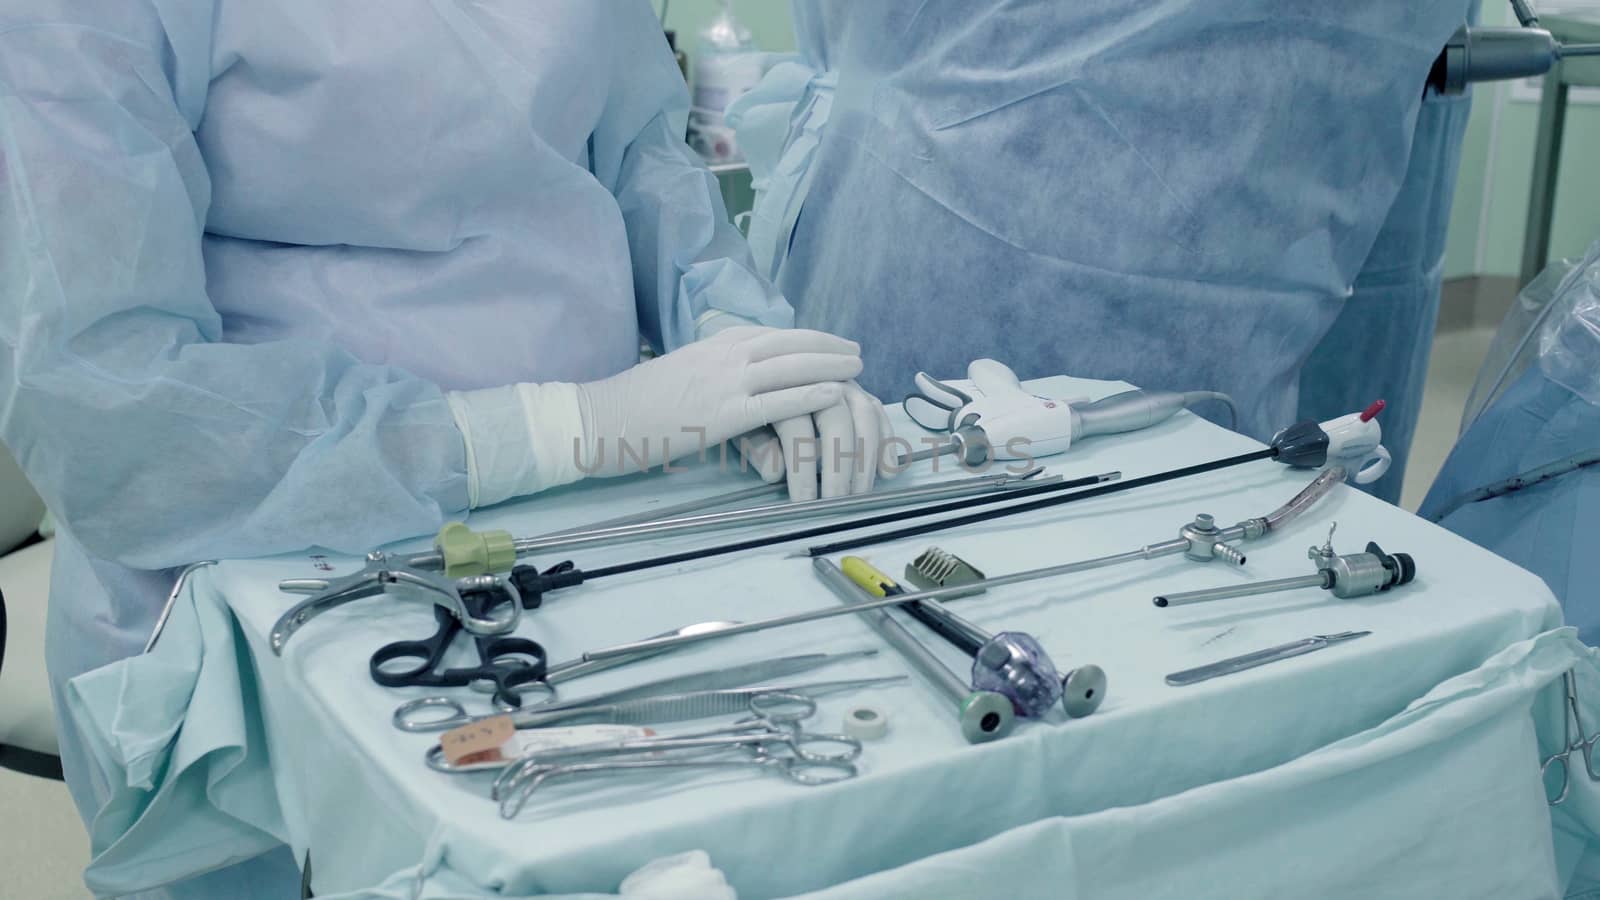 Laparoscopic surgery of the abdomen. The surgical nurse prepares the medical instrument